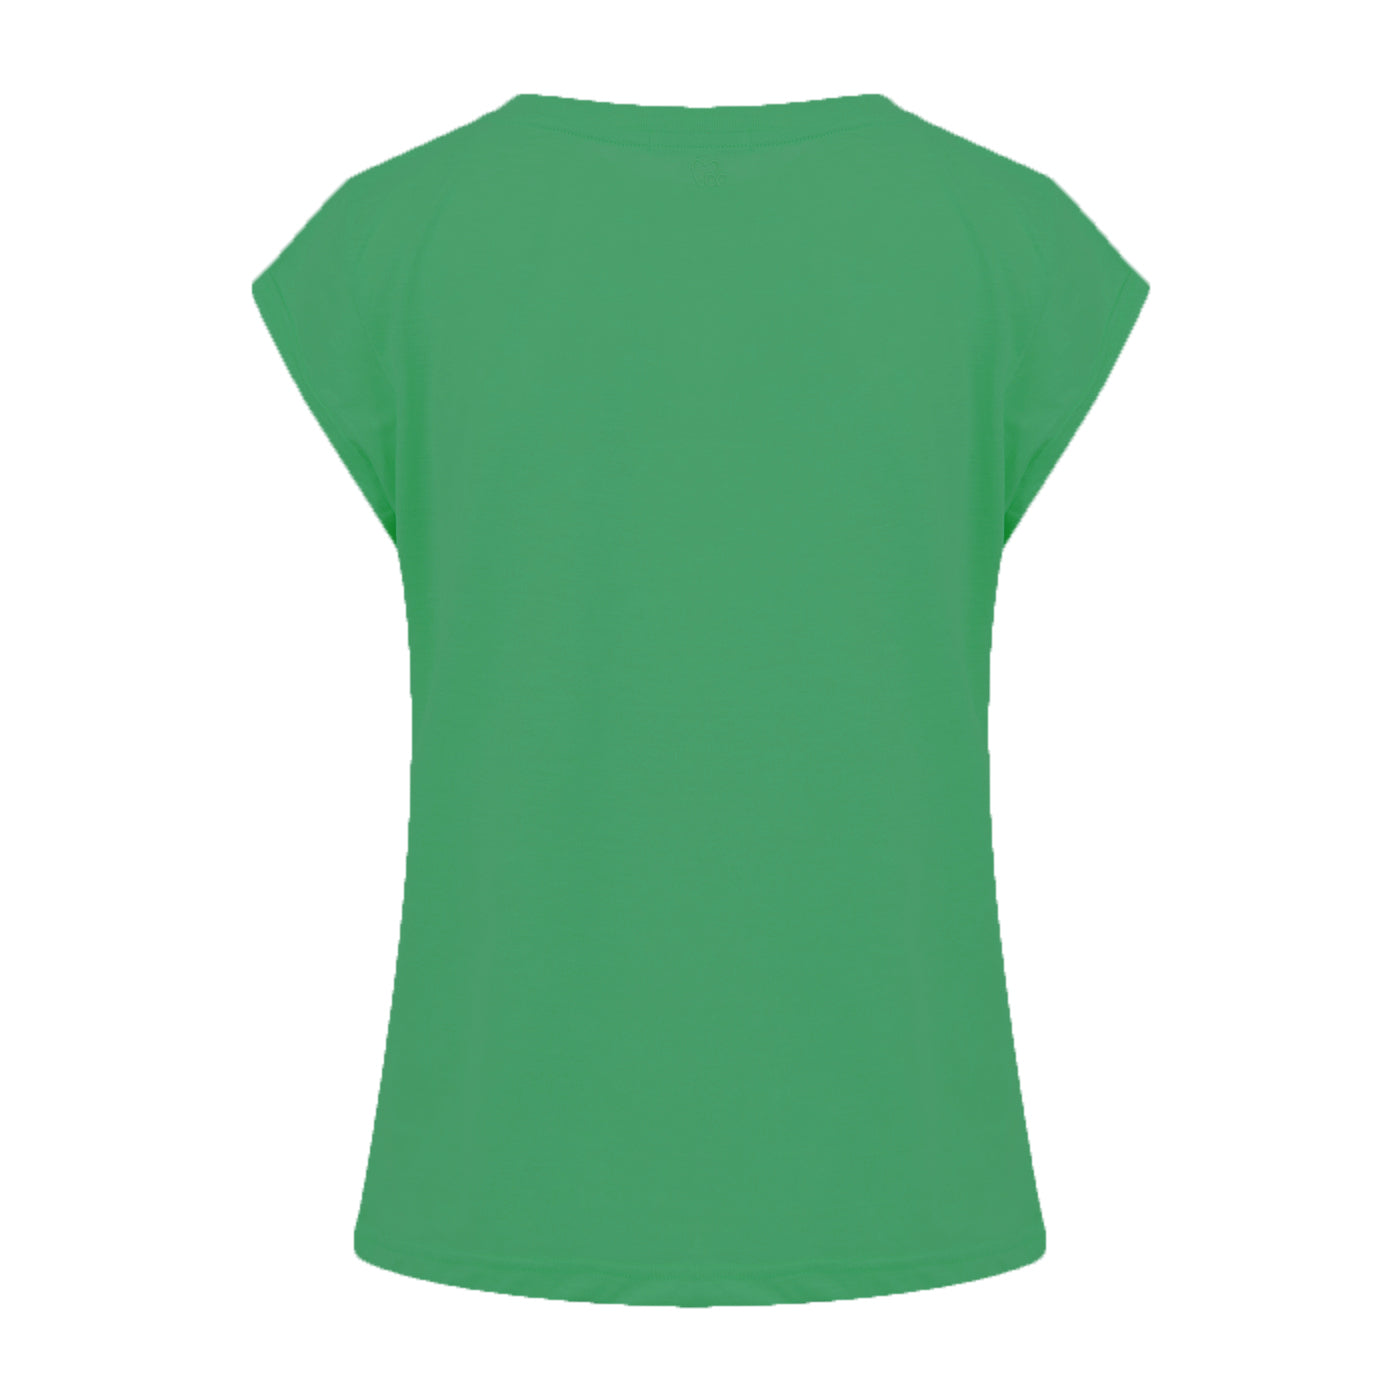 CC Heart Basic T-Shirt Emerald Green